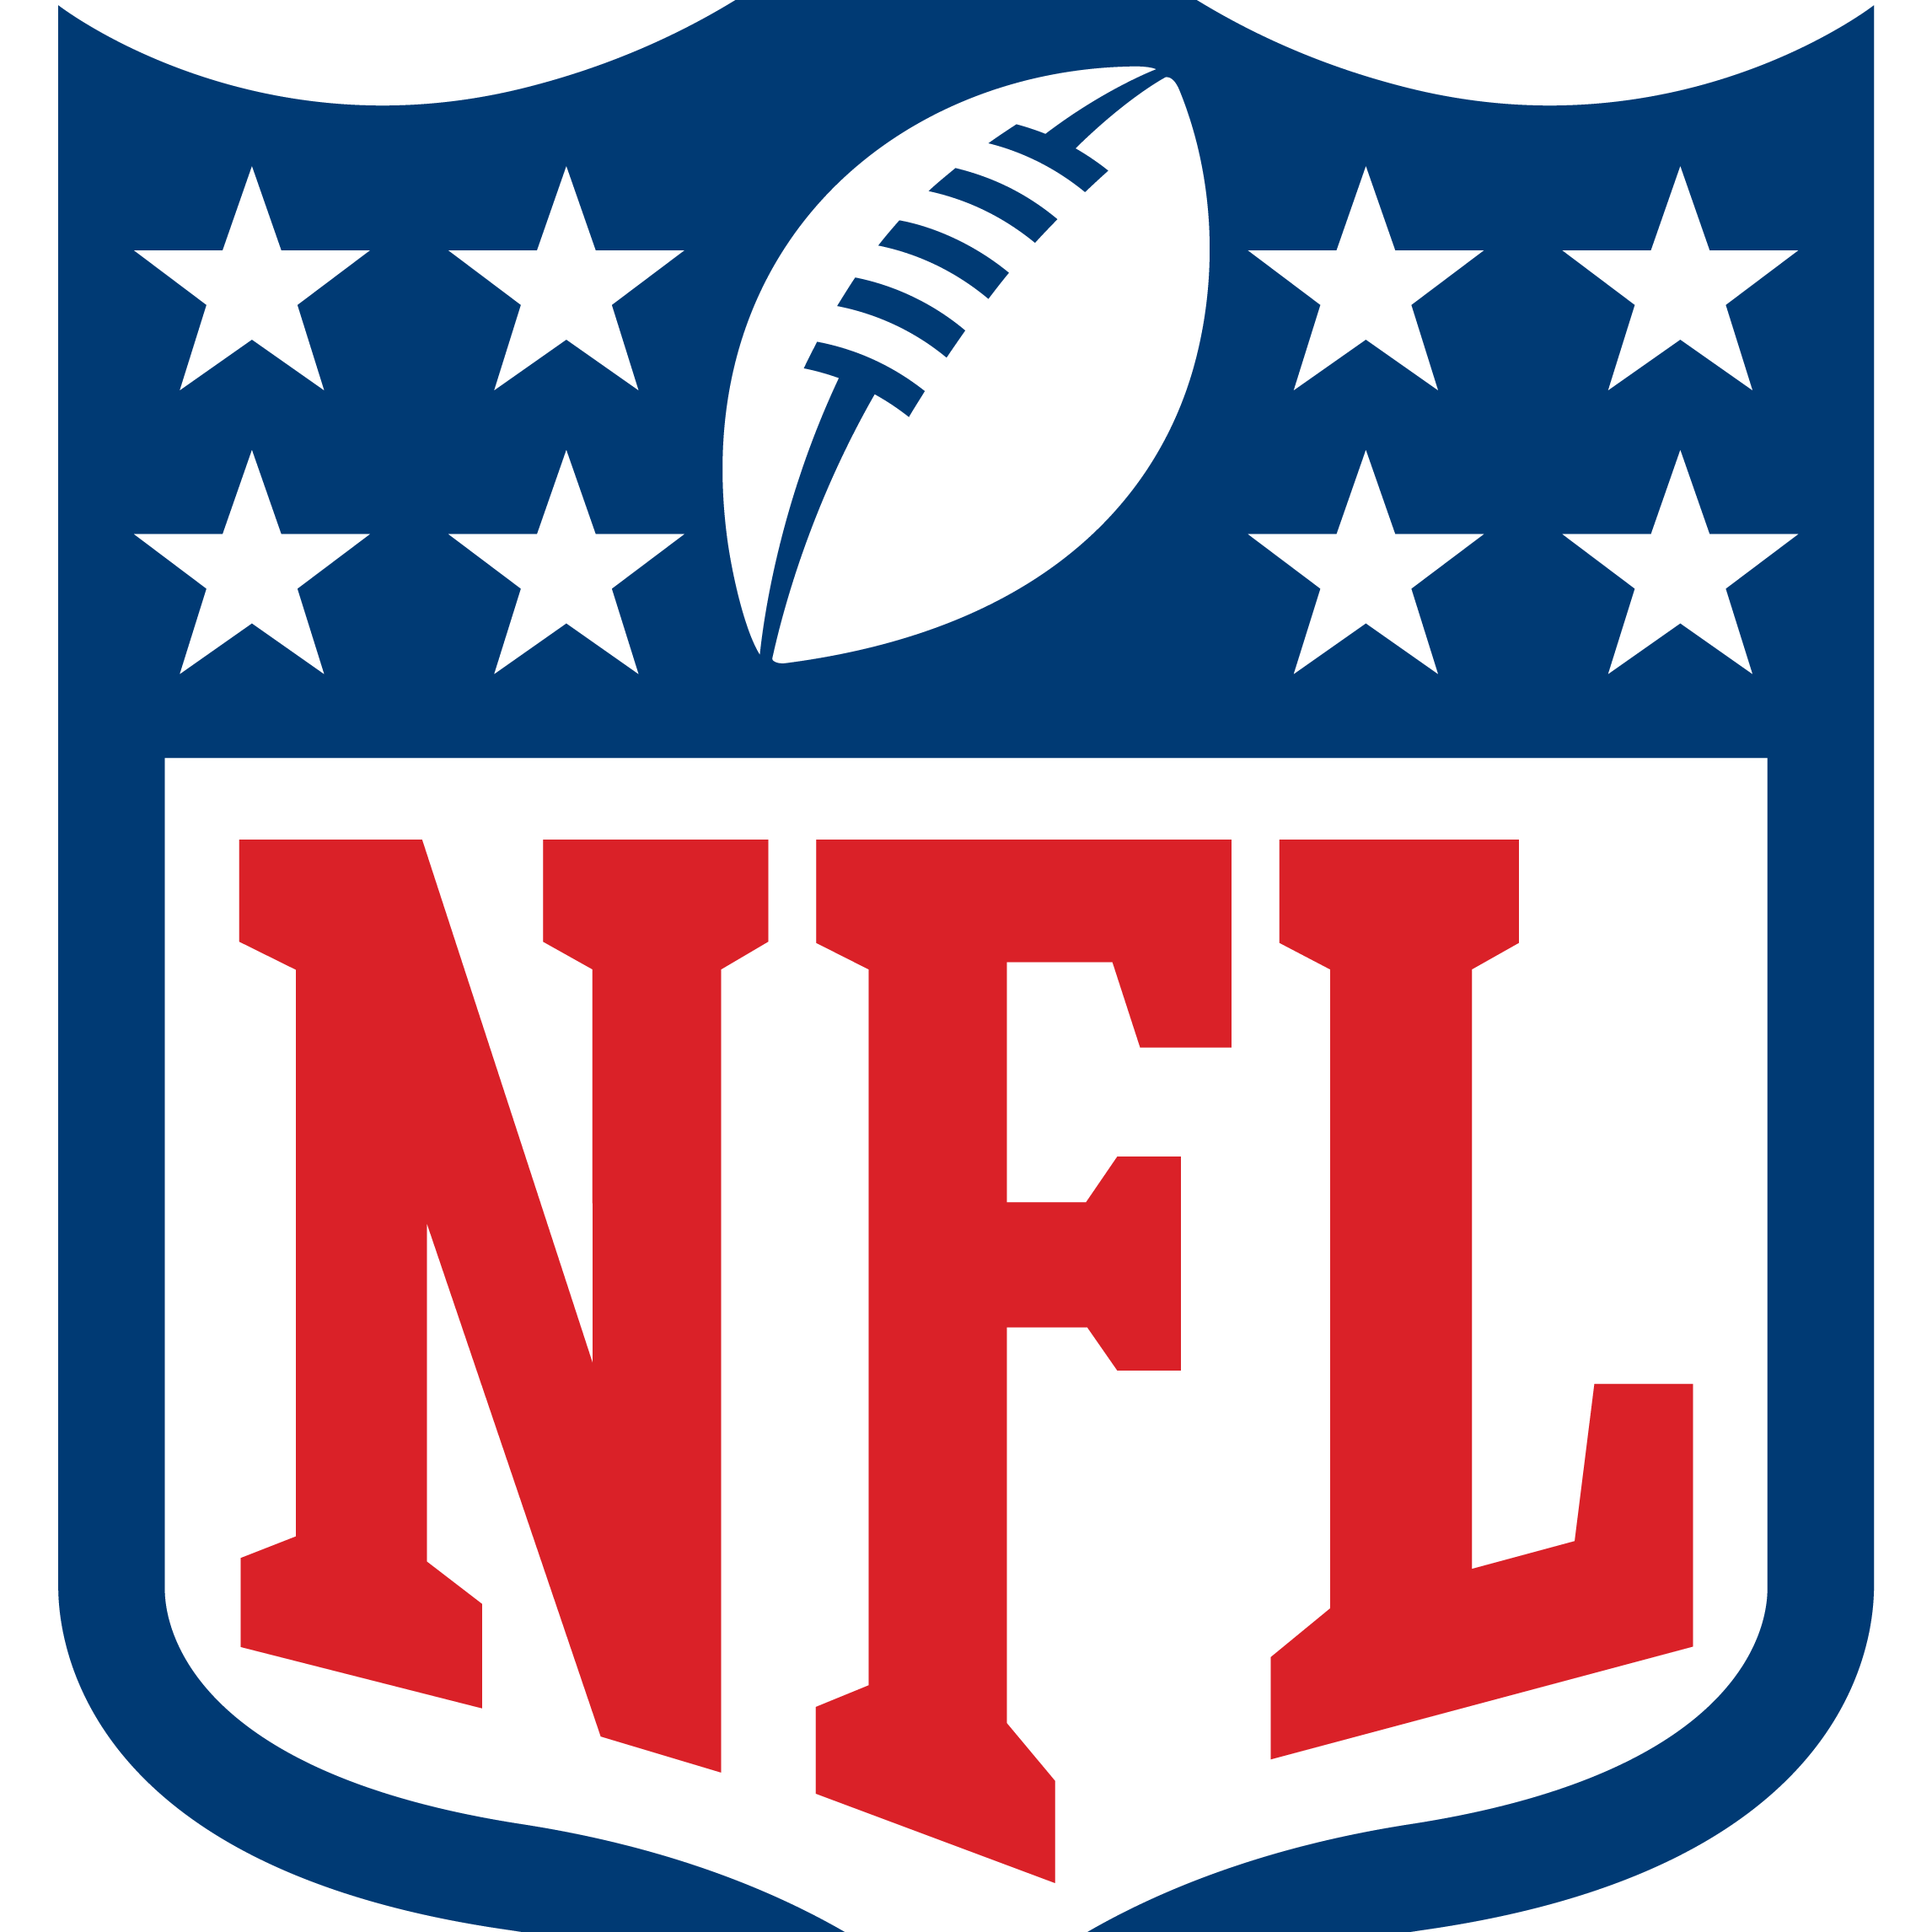 Logo of NFL Network